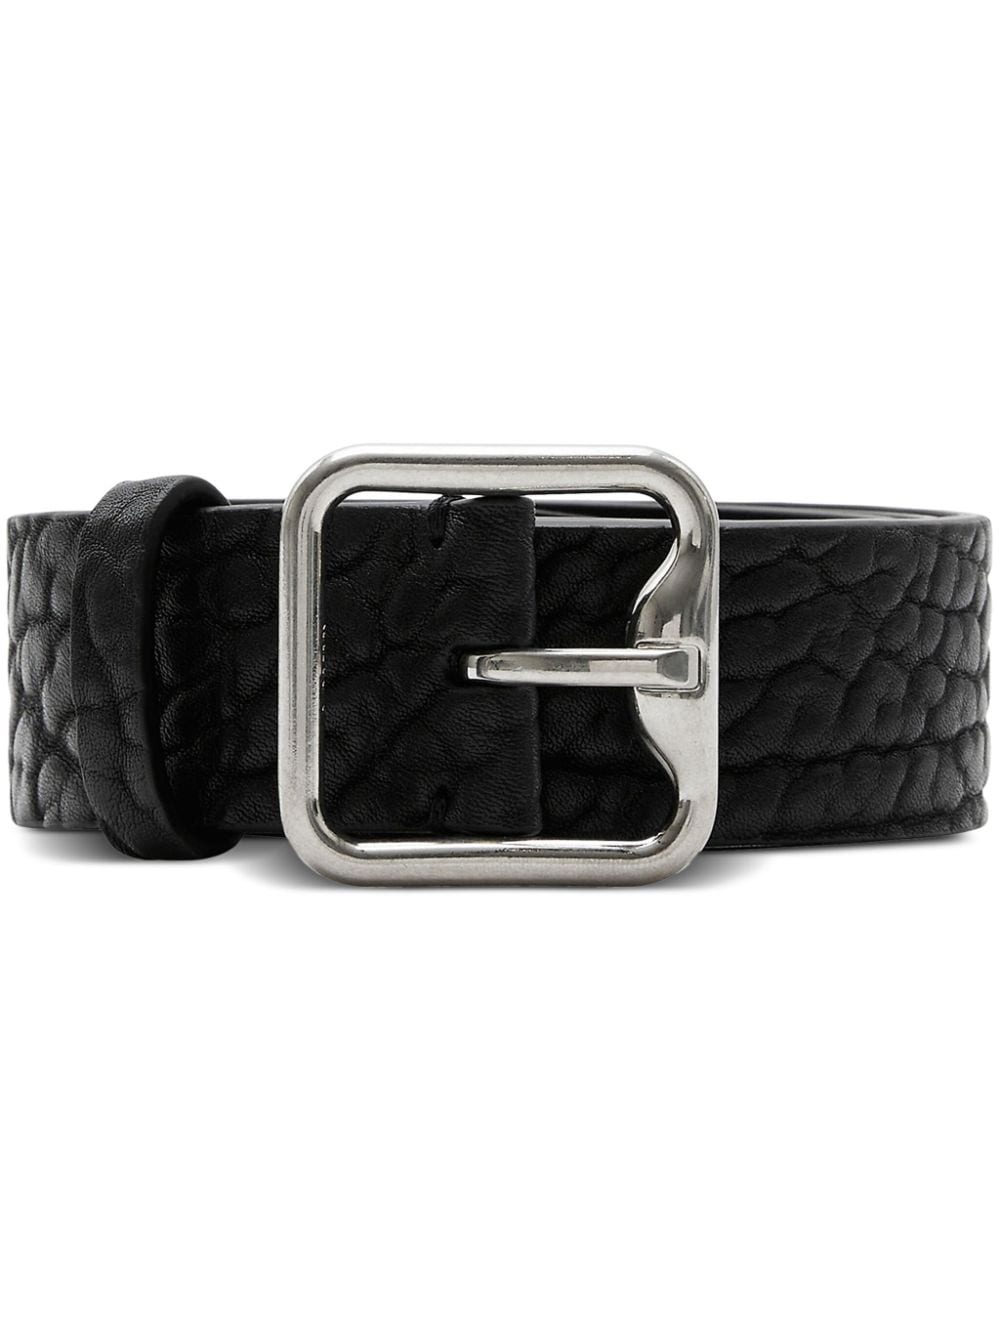 Burberry B-buckle leather belt - Black von Burberry